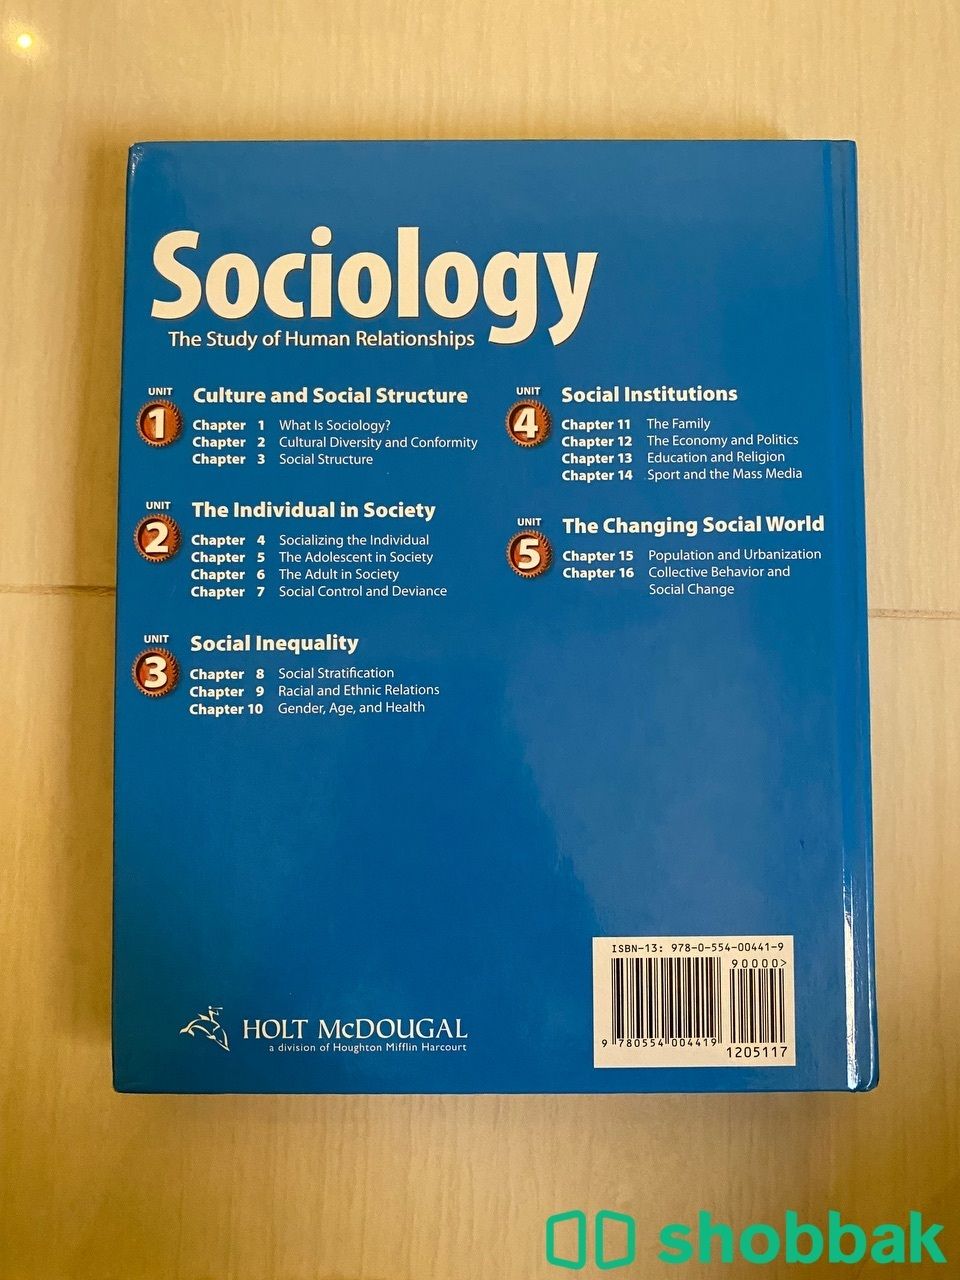 Sociology Shobbak Saudi Arabia